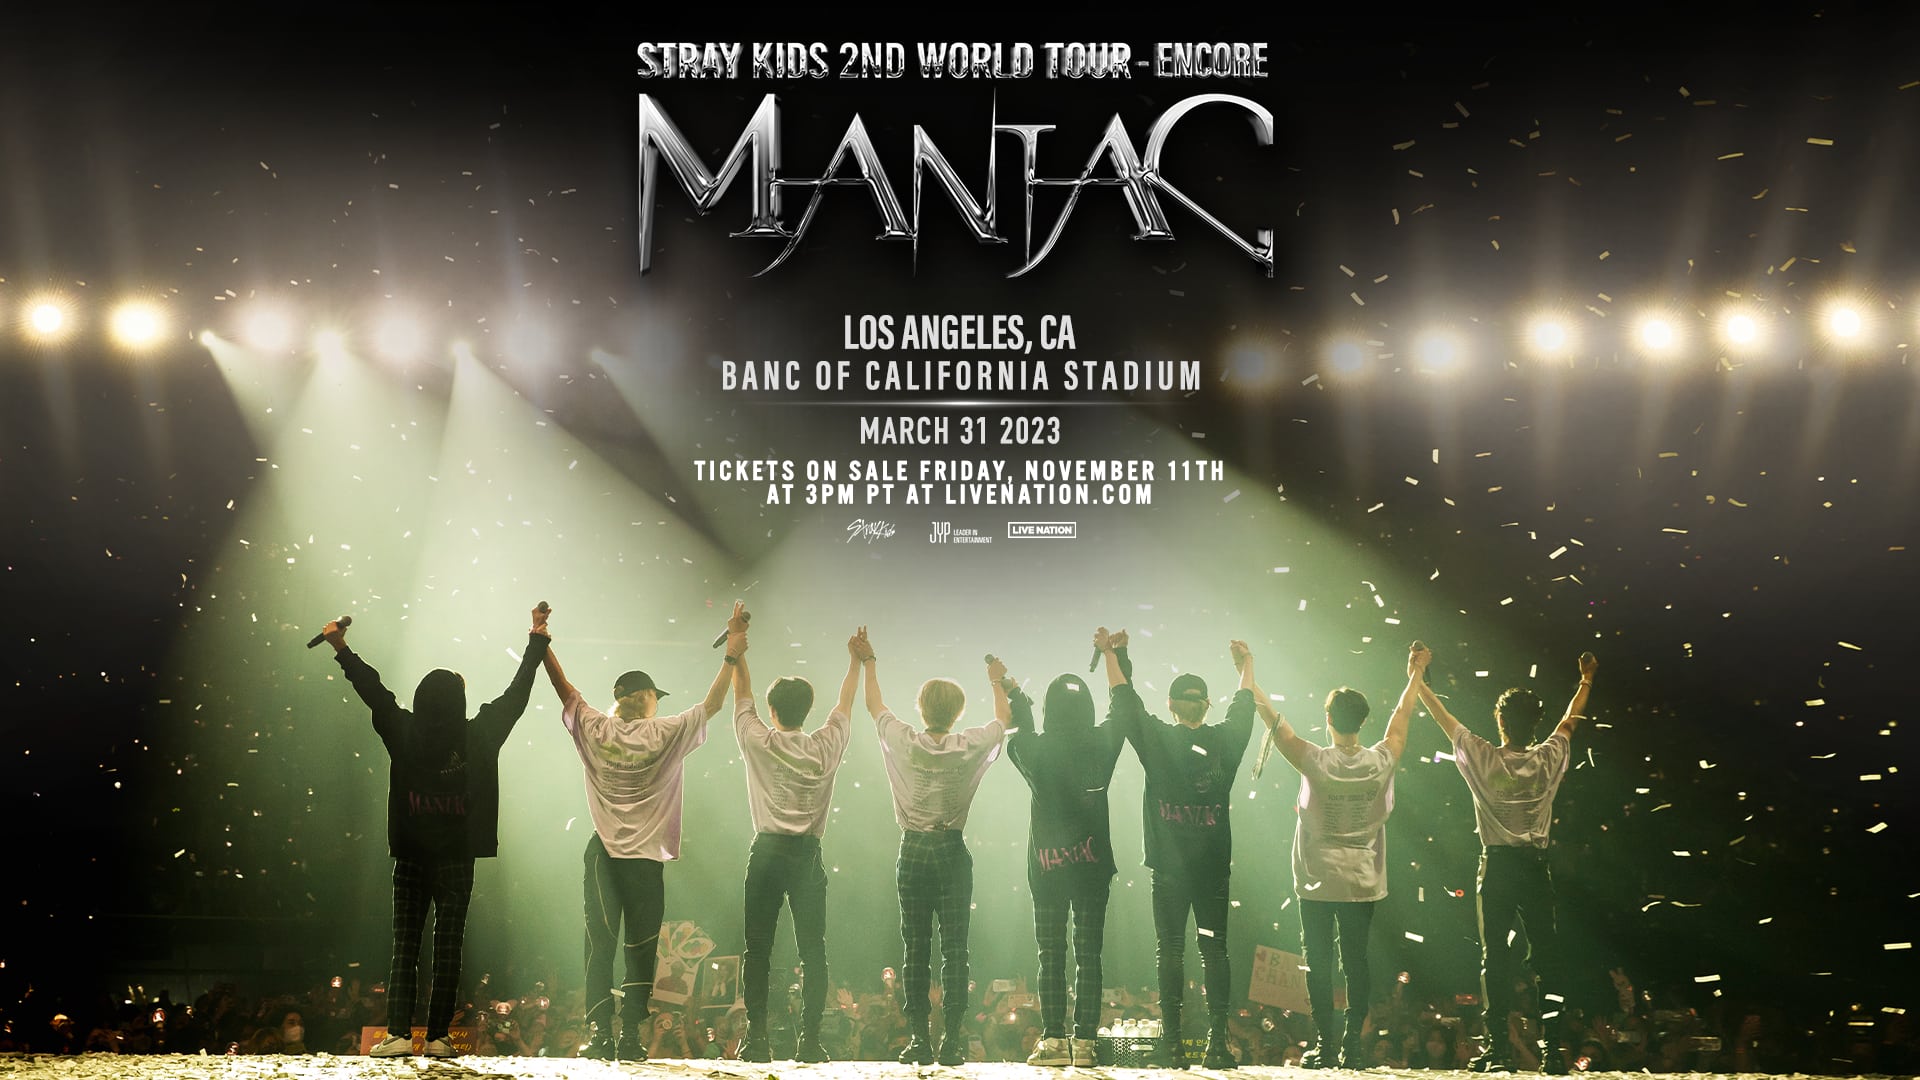 K-POP STARS STRAY KIDS ANNOUNCE 2ND WORLD TOUR “MANIAC” ENCORE 